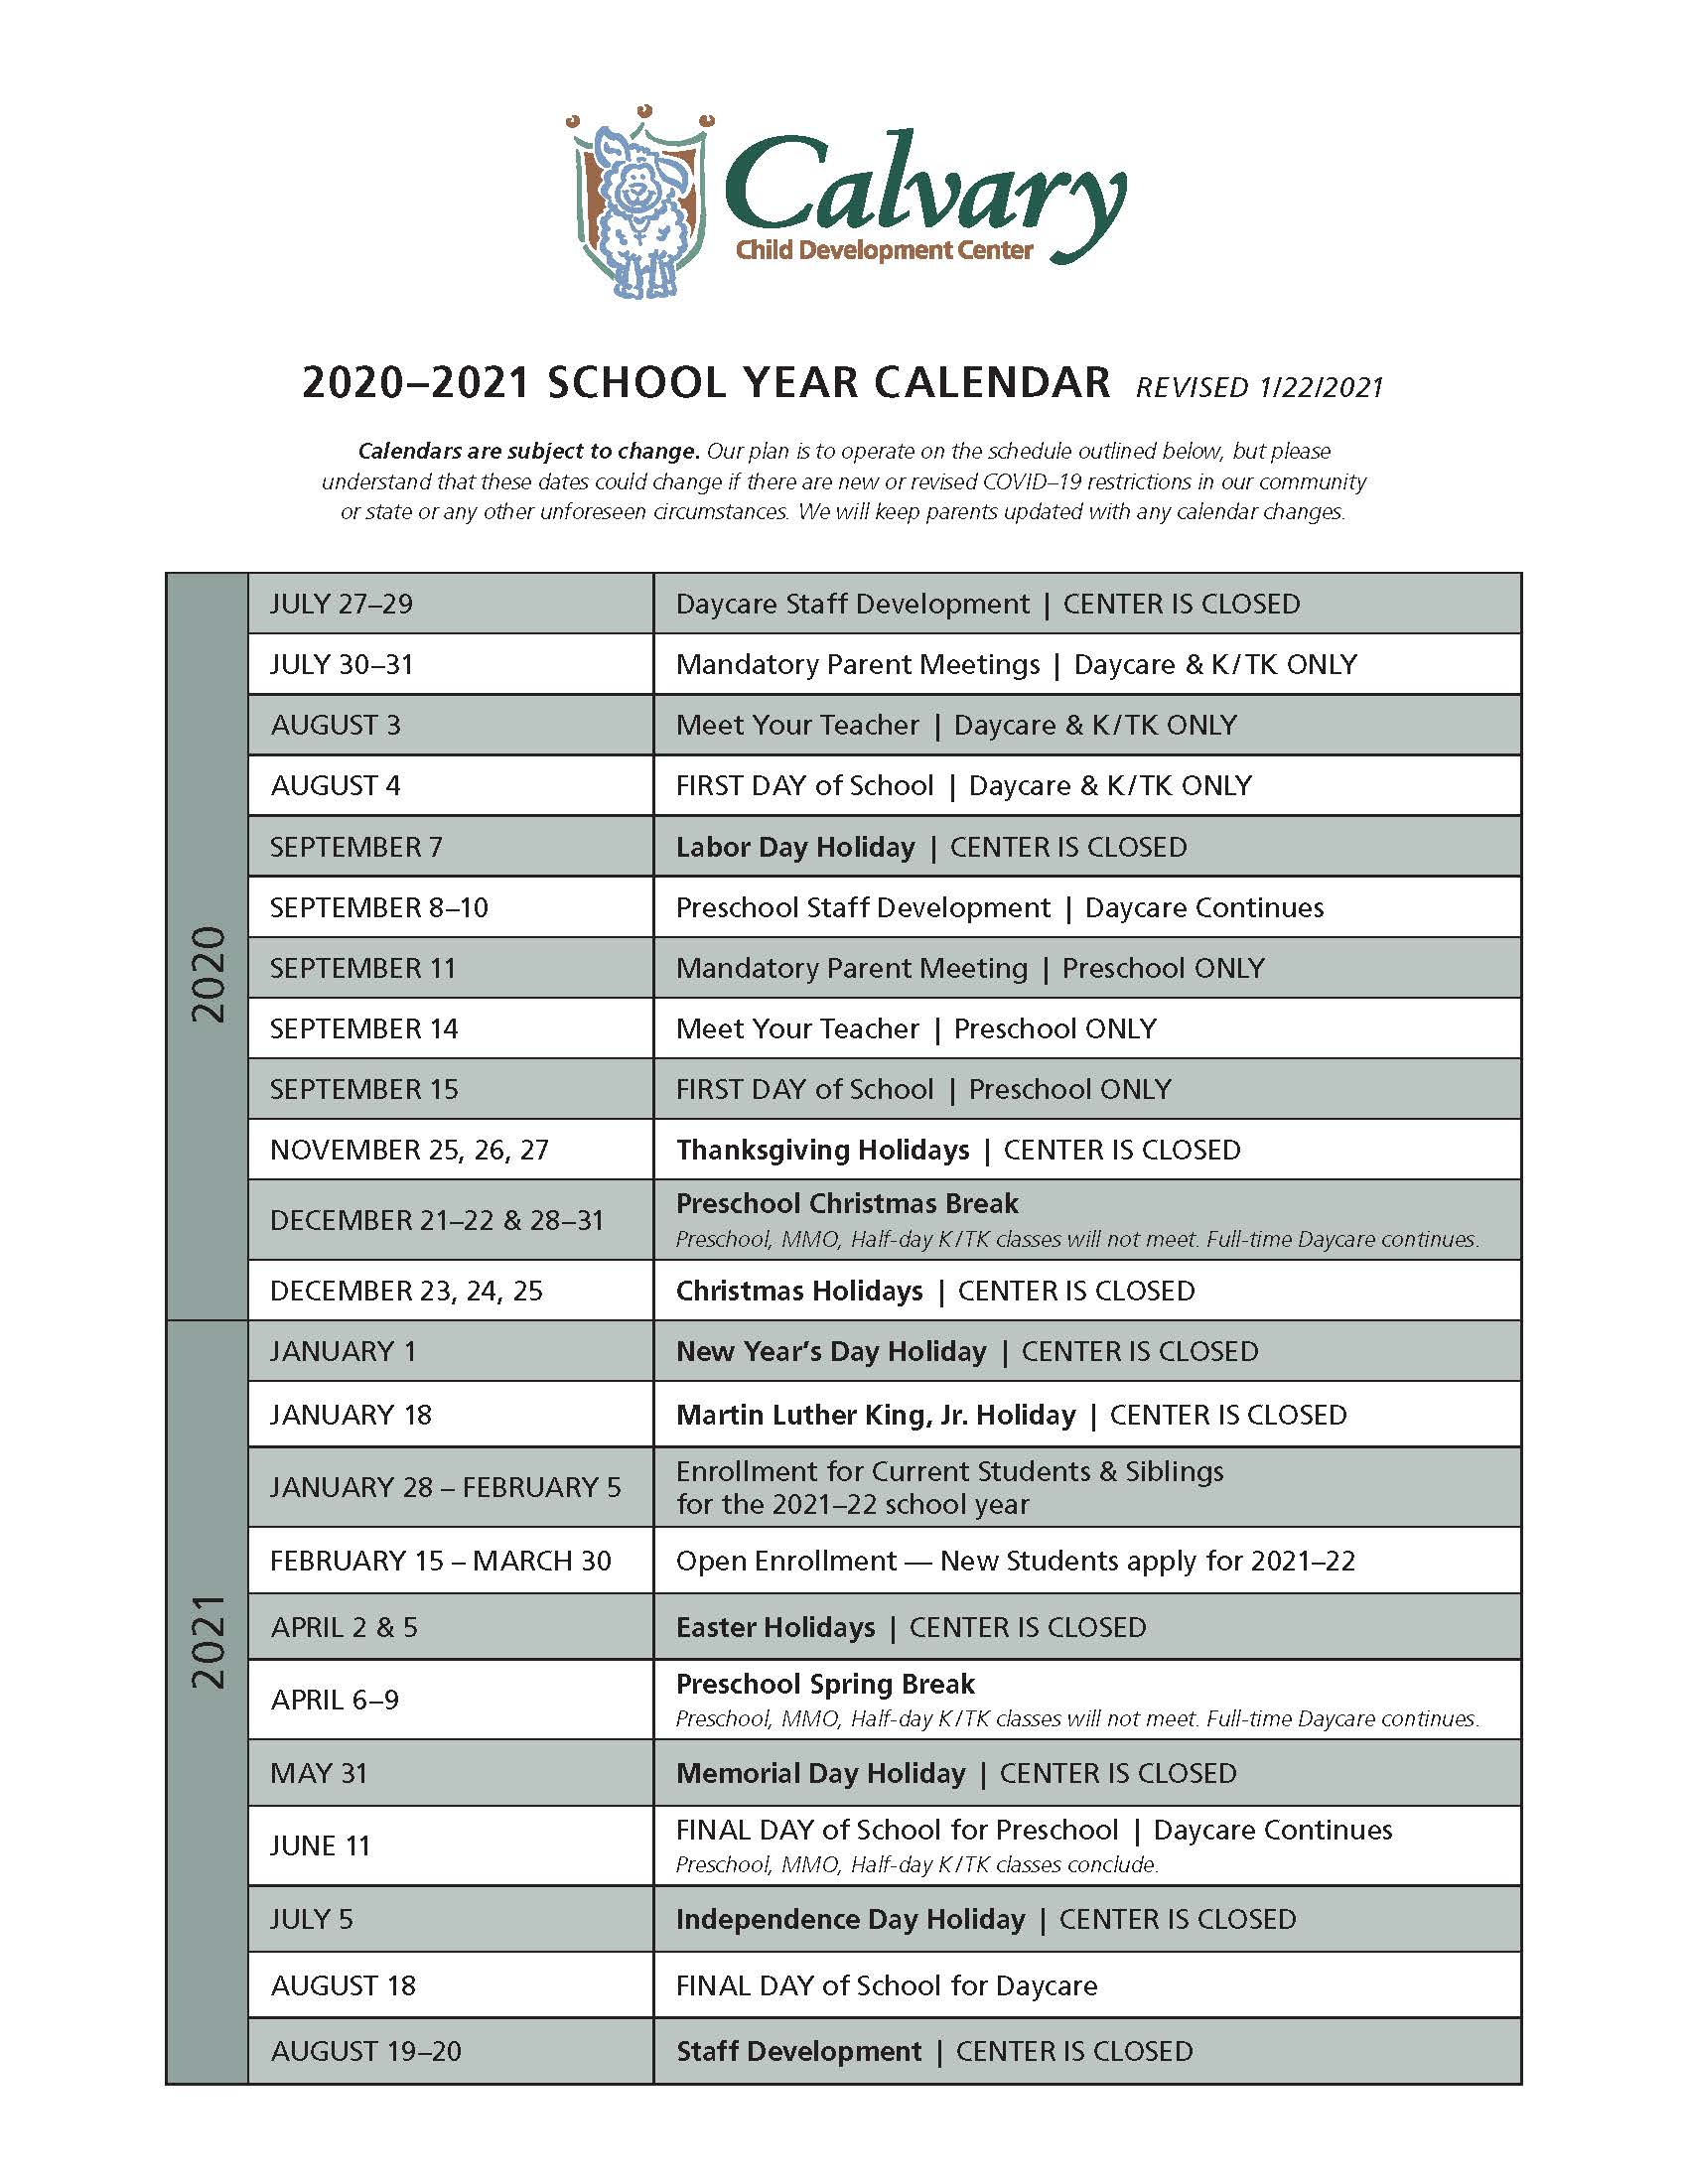 ccdc-school-year-calendars-calvary-church